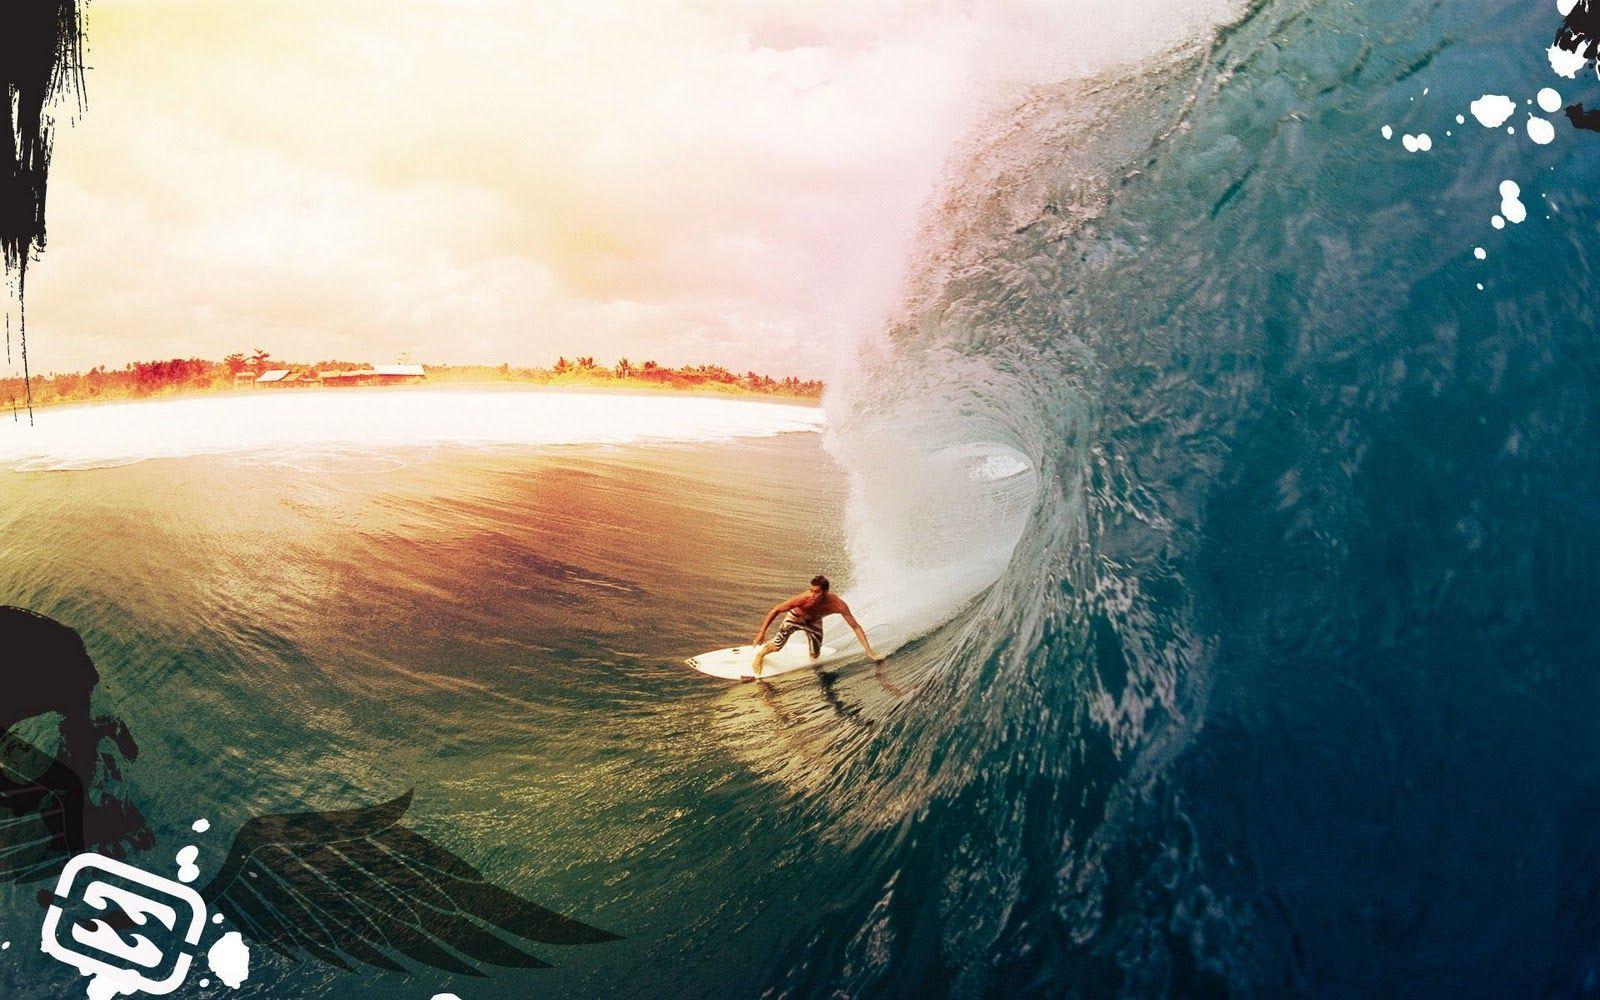 image For > Surfboard Wallpaper